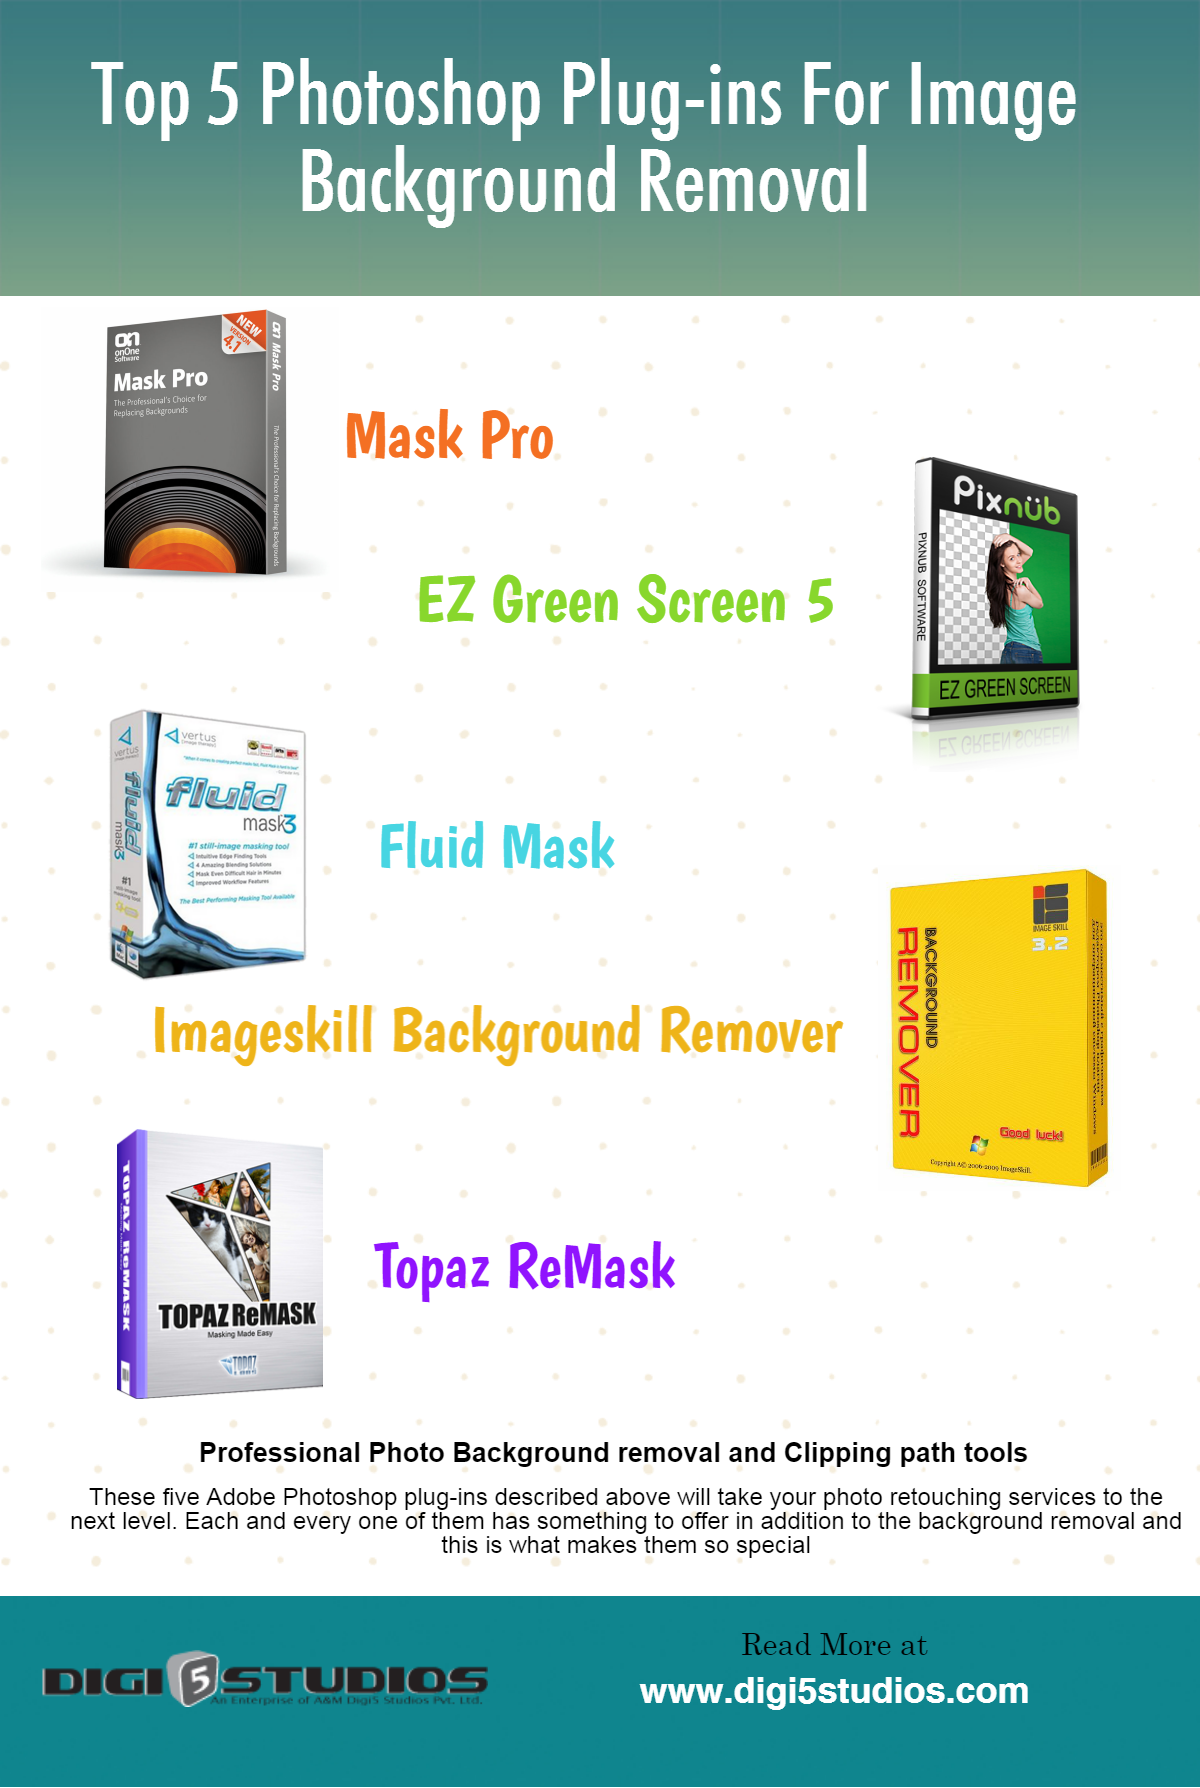 Top 5 Photoshop Plug-ins For Photo Background Removal | Digi5studios Blog